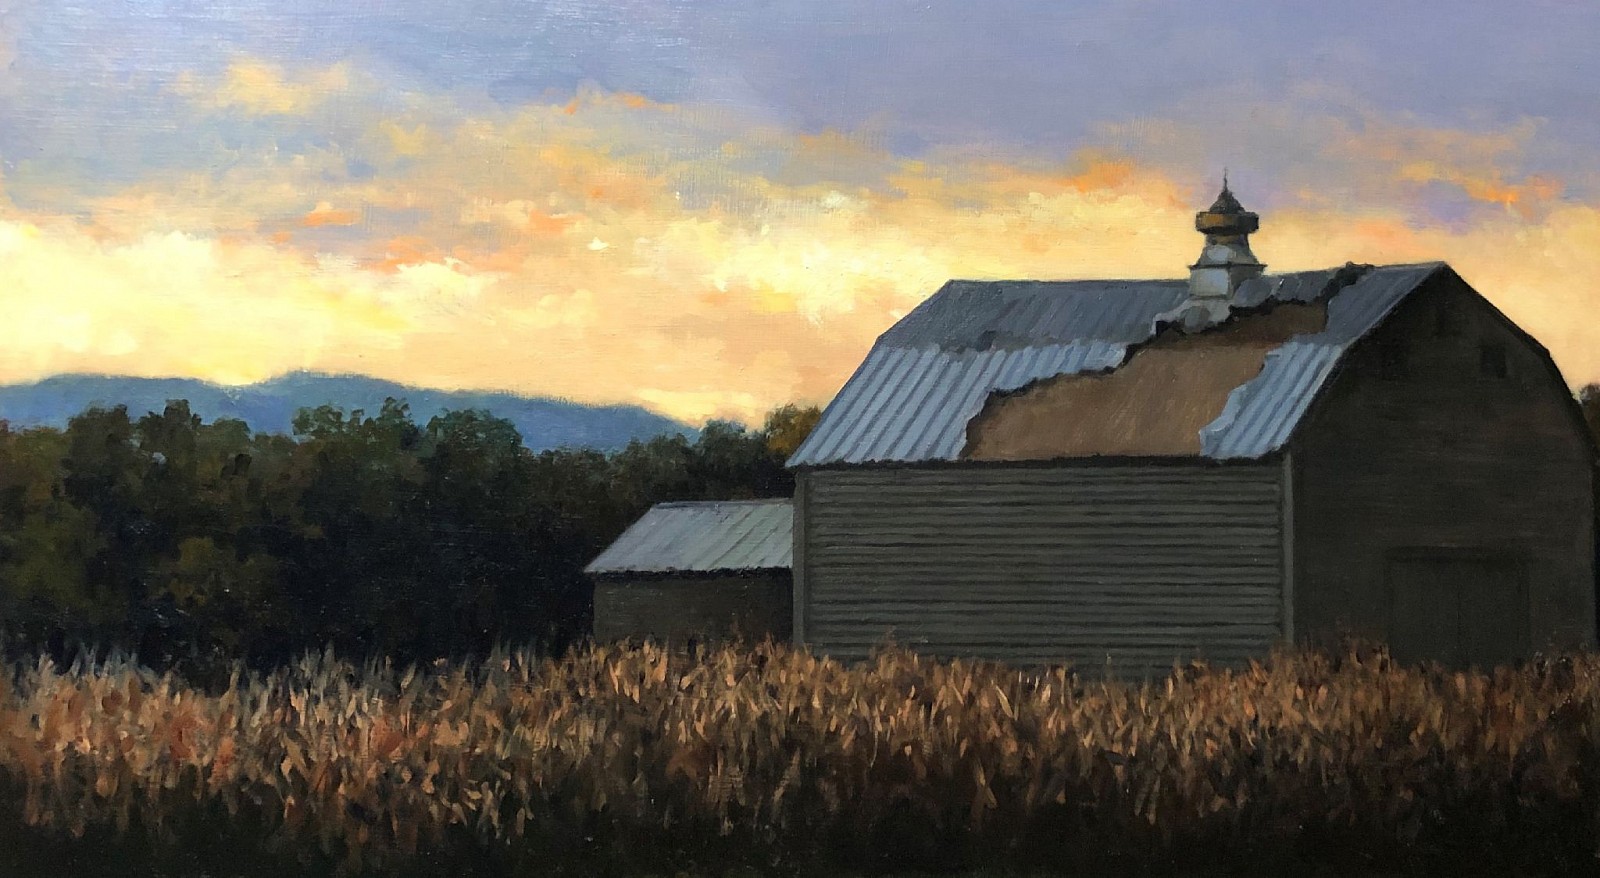 David Peikon, Wheat Field Elegy
oil on panel, 12 x 24 in. (30.5 x 61 cm)
DP200203